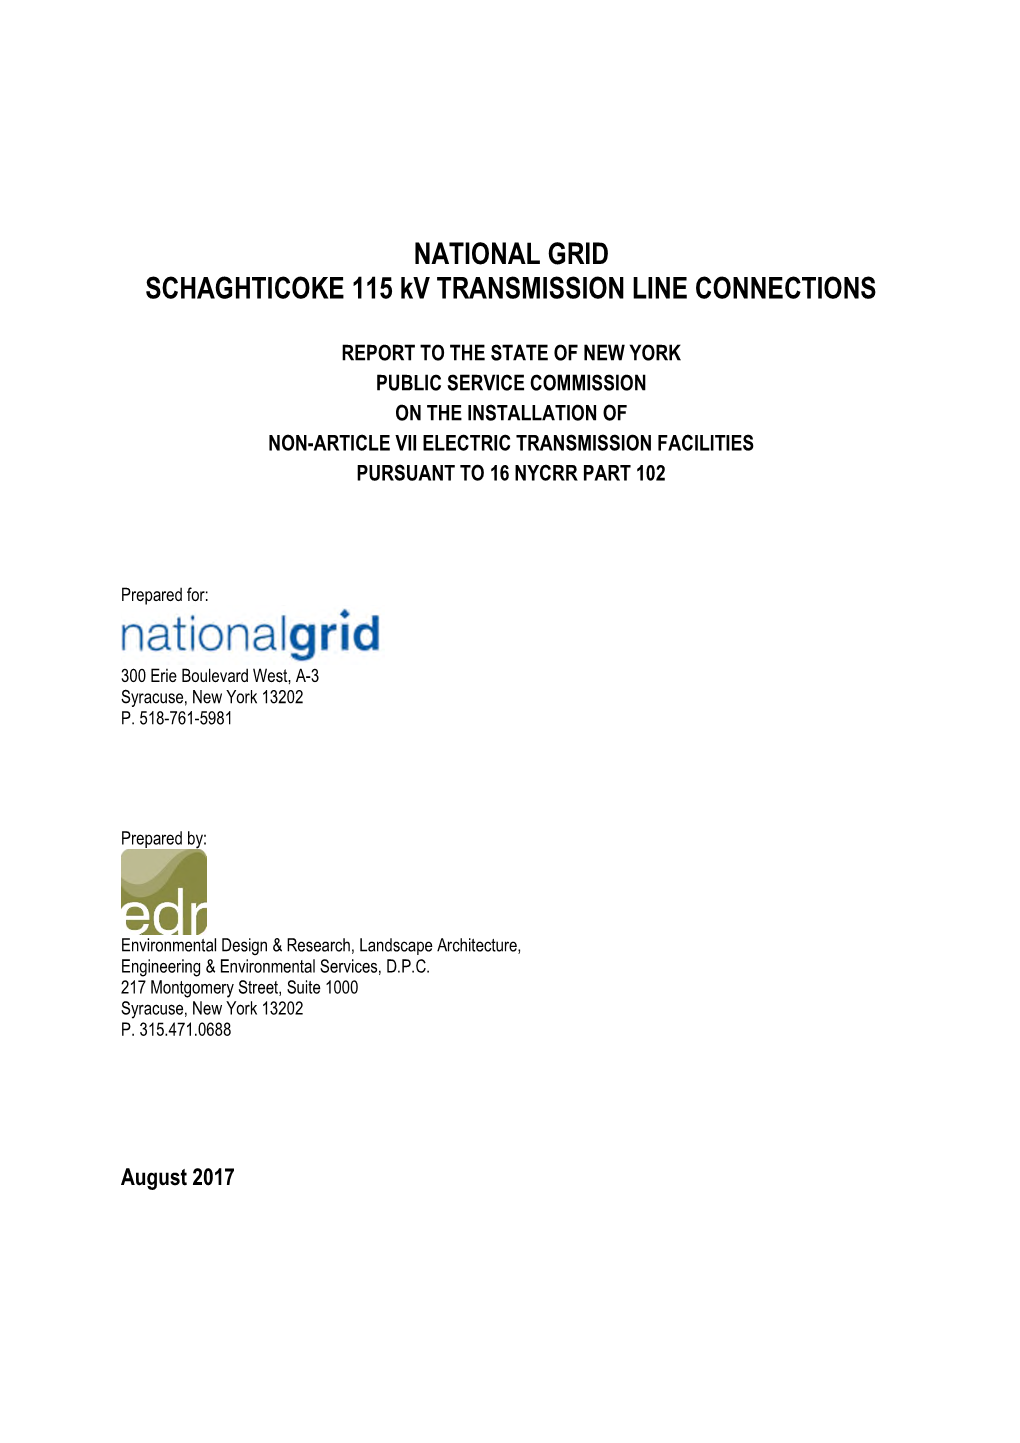 NATIONAL GRID SCHAGHTICOKE 115 Kv TRANSMISSION LINE CONNECTIONS